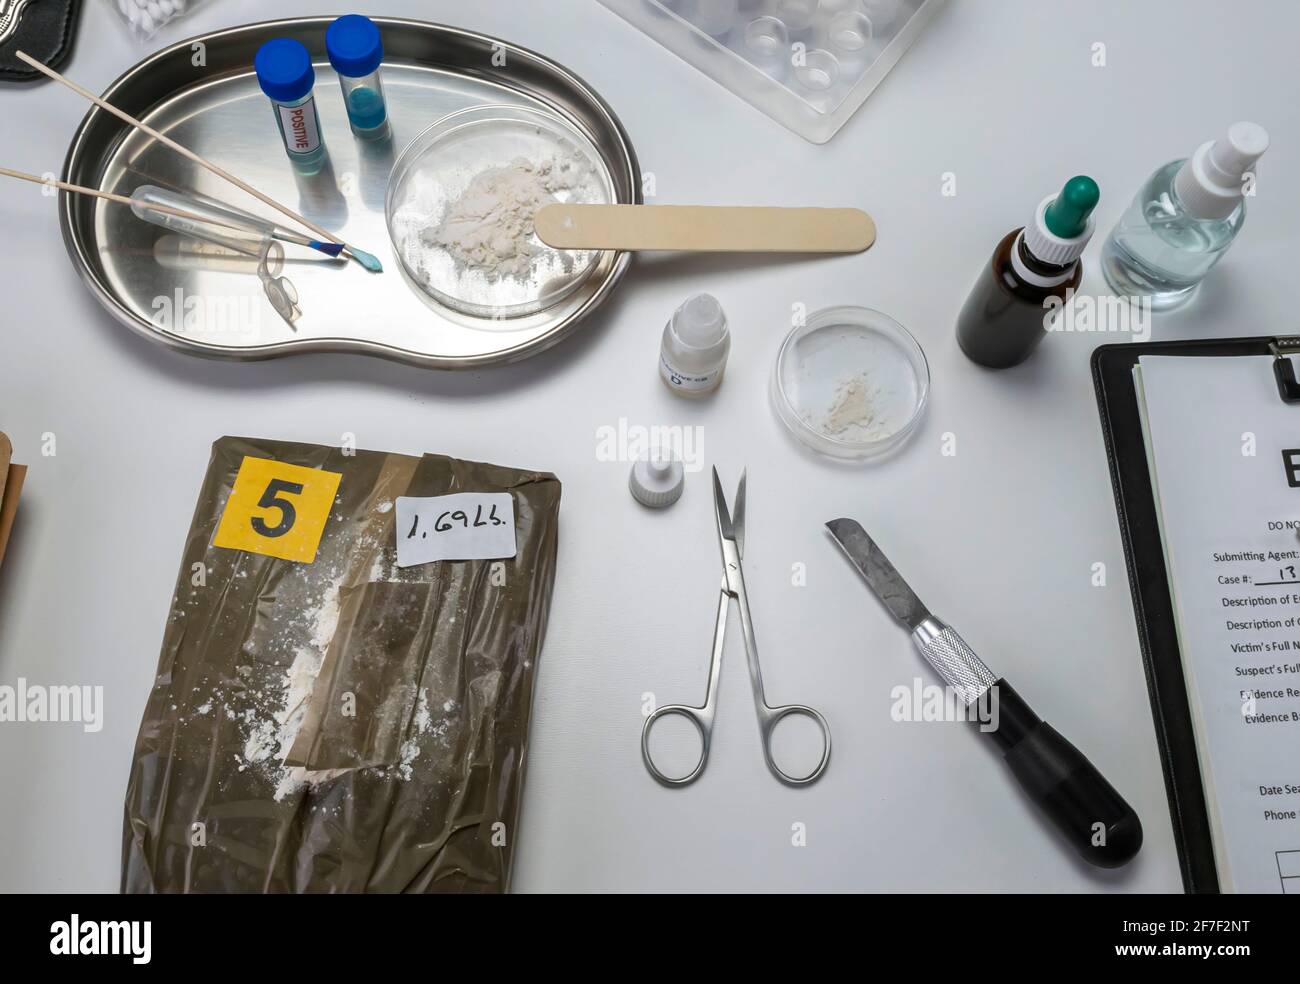 crime lab drug test, conceptual image Stock Photo